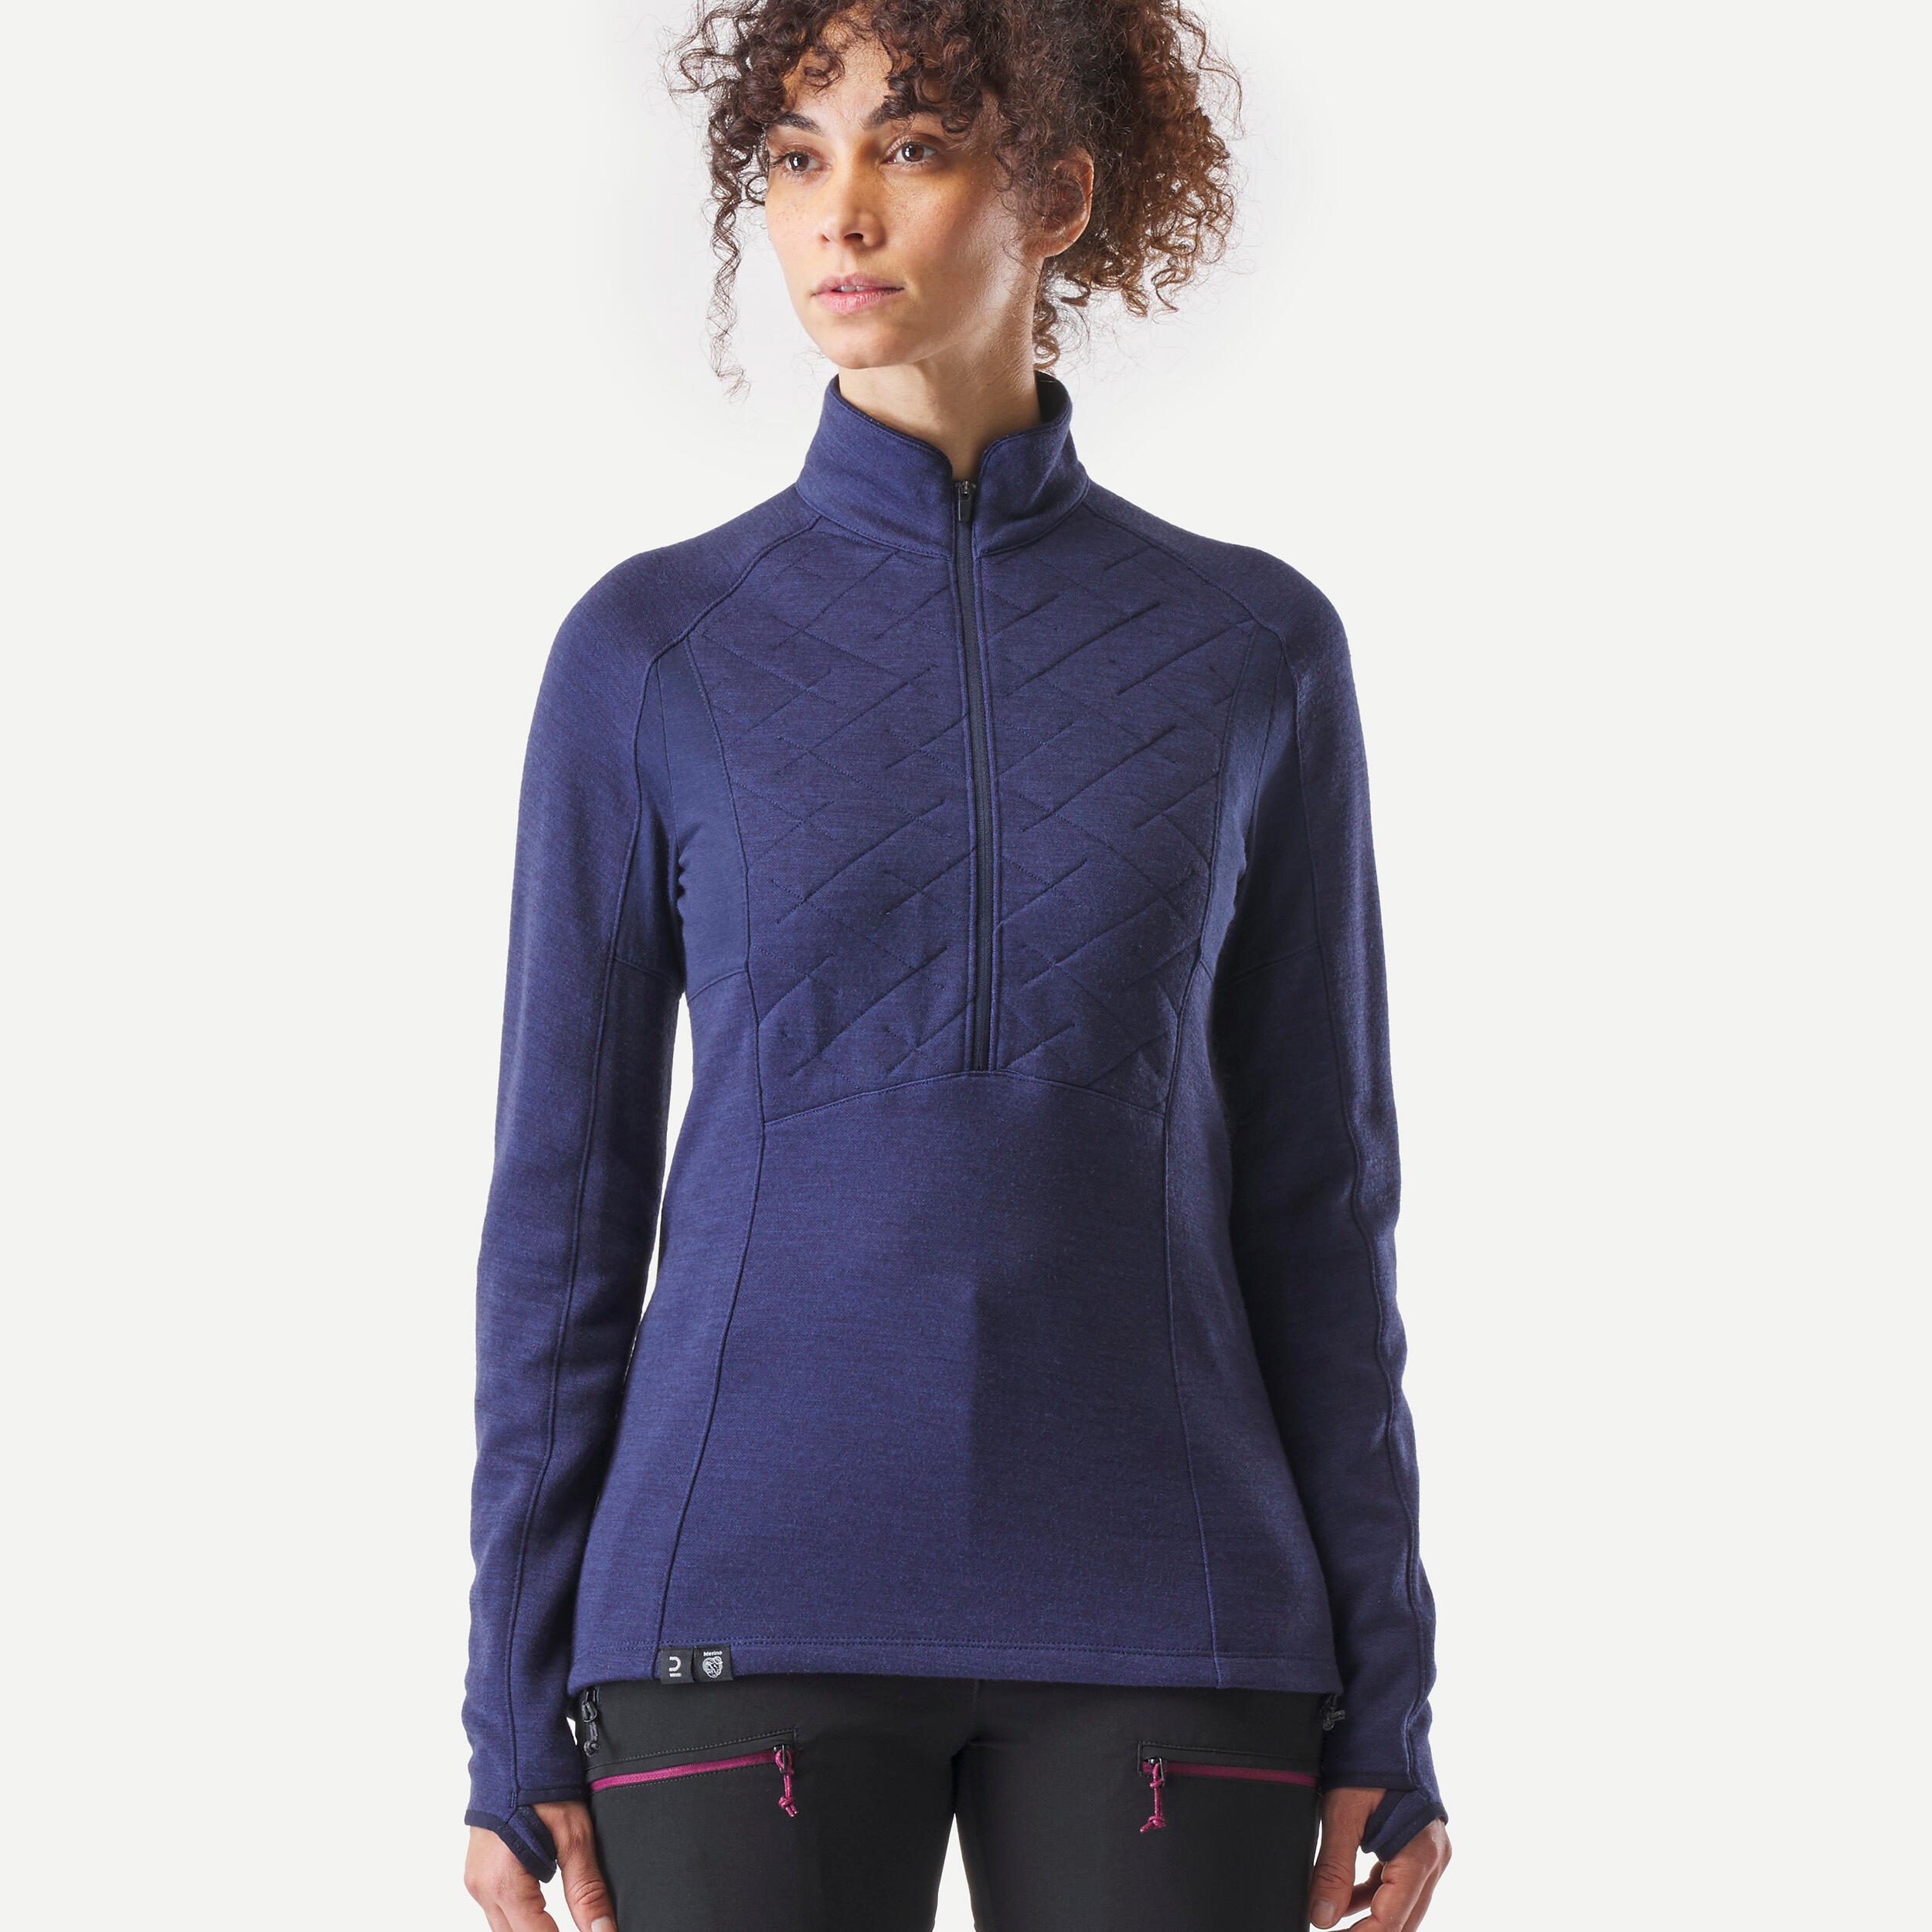 Women's Merino Wool Long-Sleeved Trekking T-Shirt - MT900 5/10